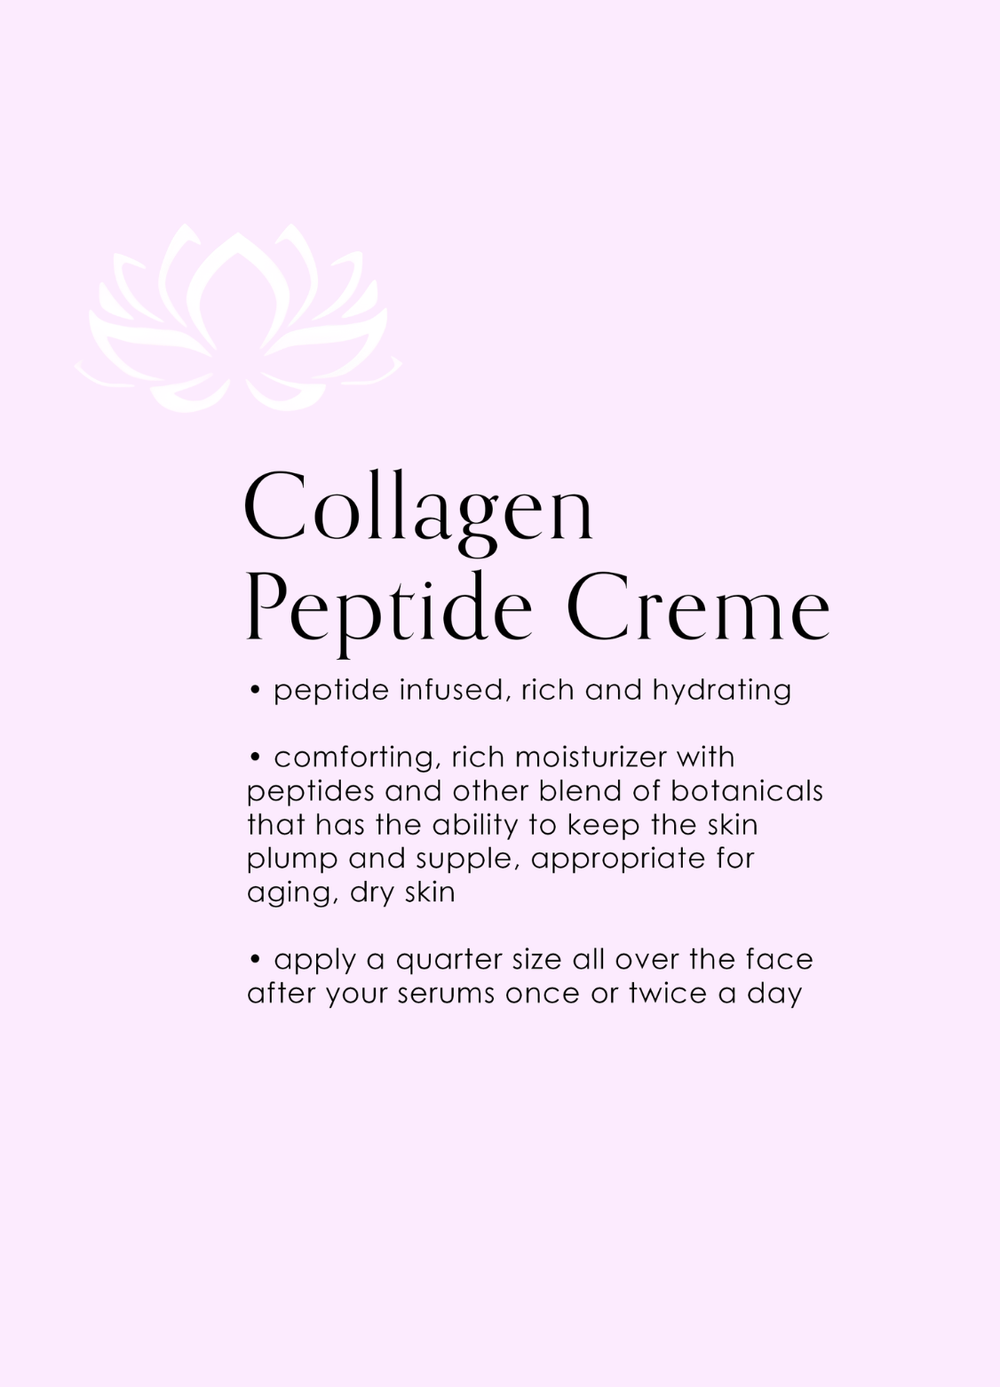 Collagen Peptide Creme